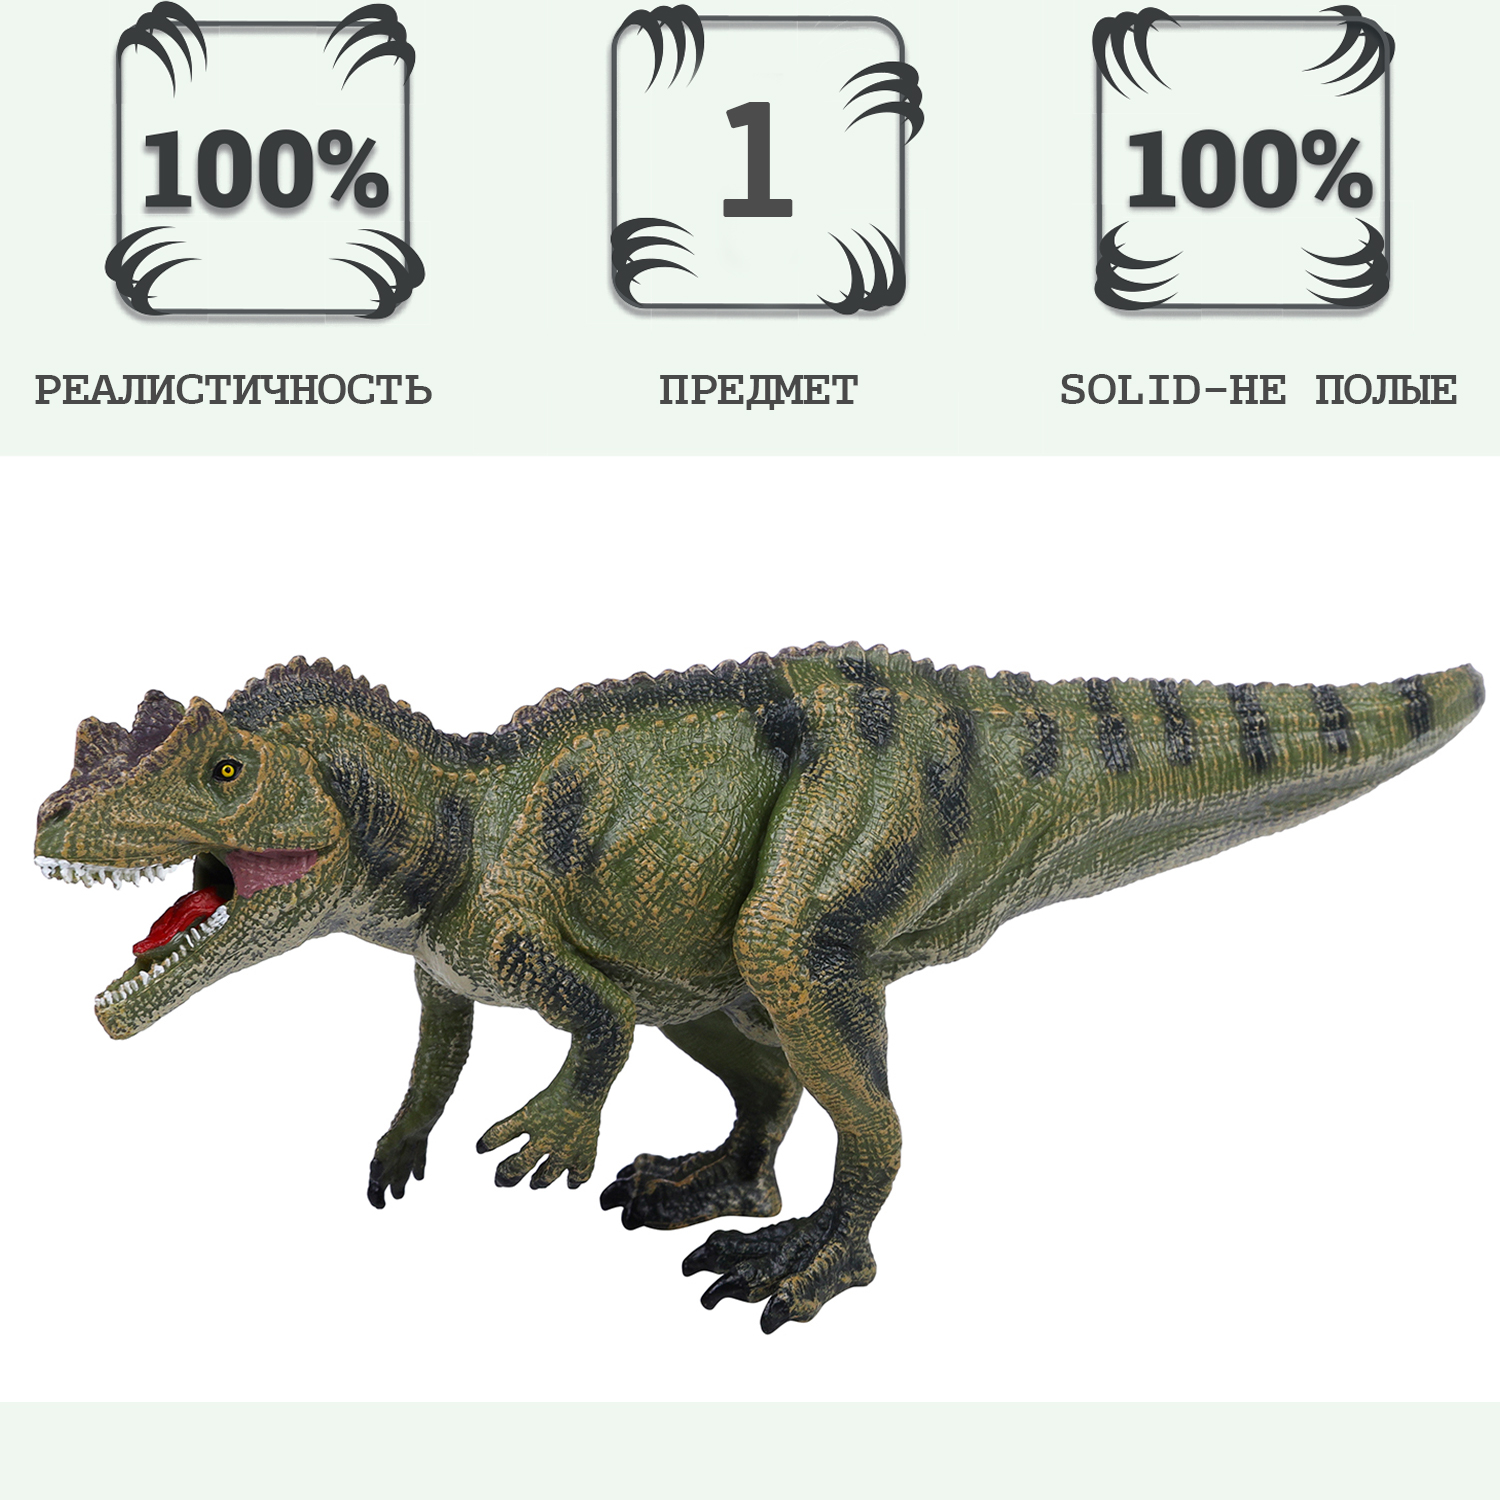 Фигурка Masai Mara динозавр серии Мир динозавров Карнотавр MM216-052 интерактивная игрушка kiddieplay фигурки динозавра пахицелафозавр и карнотавр